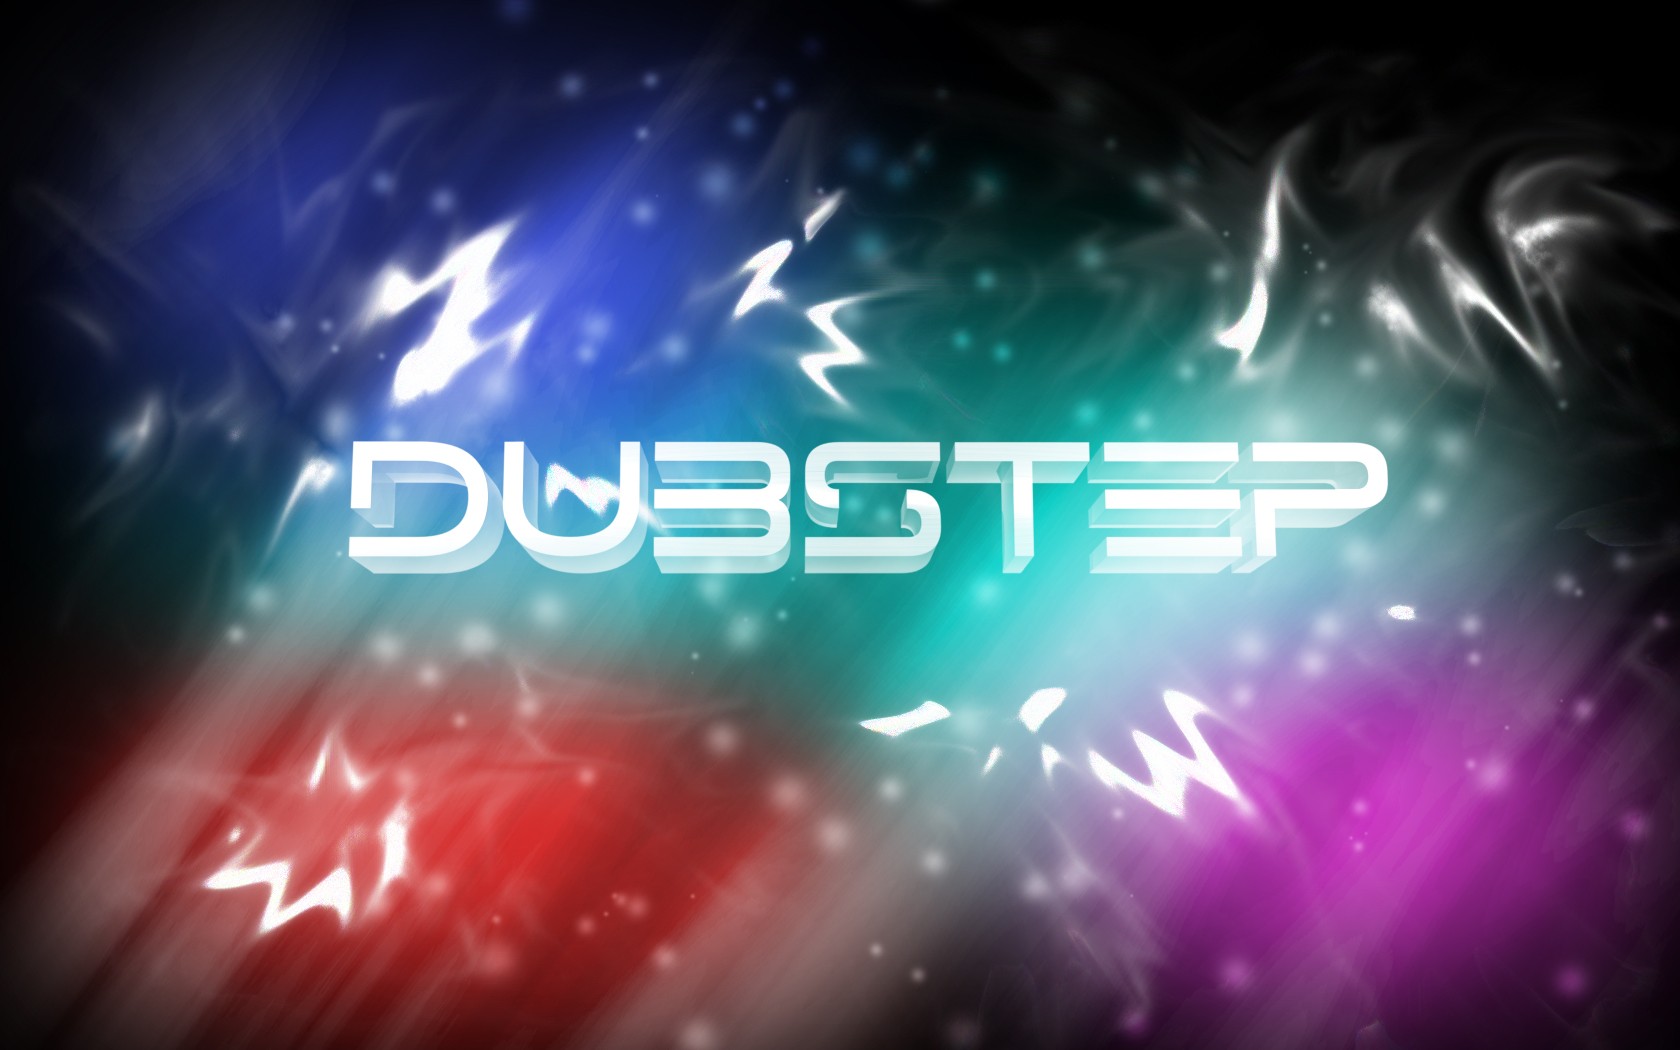 Descarga gratuita de fondo de pantalla para móvil de Música, Dubstep.